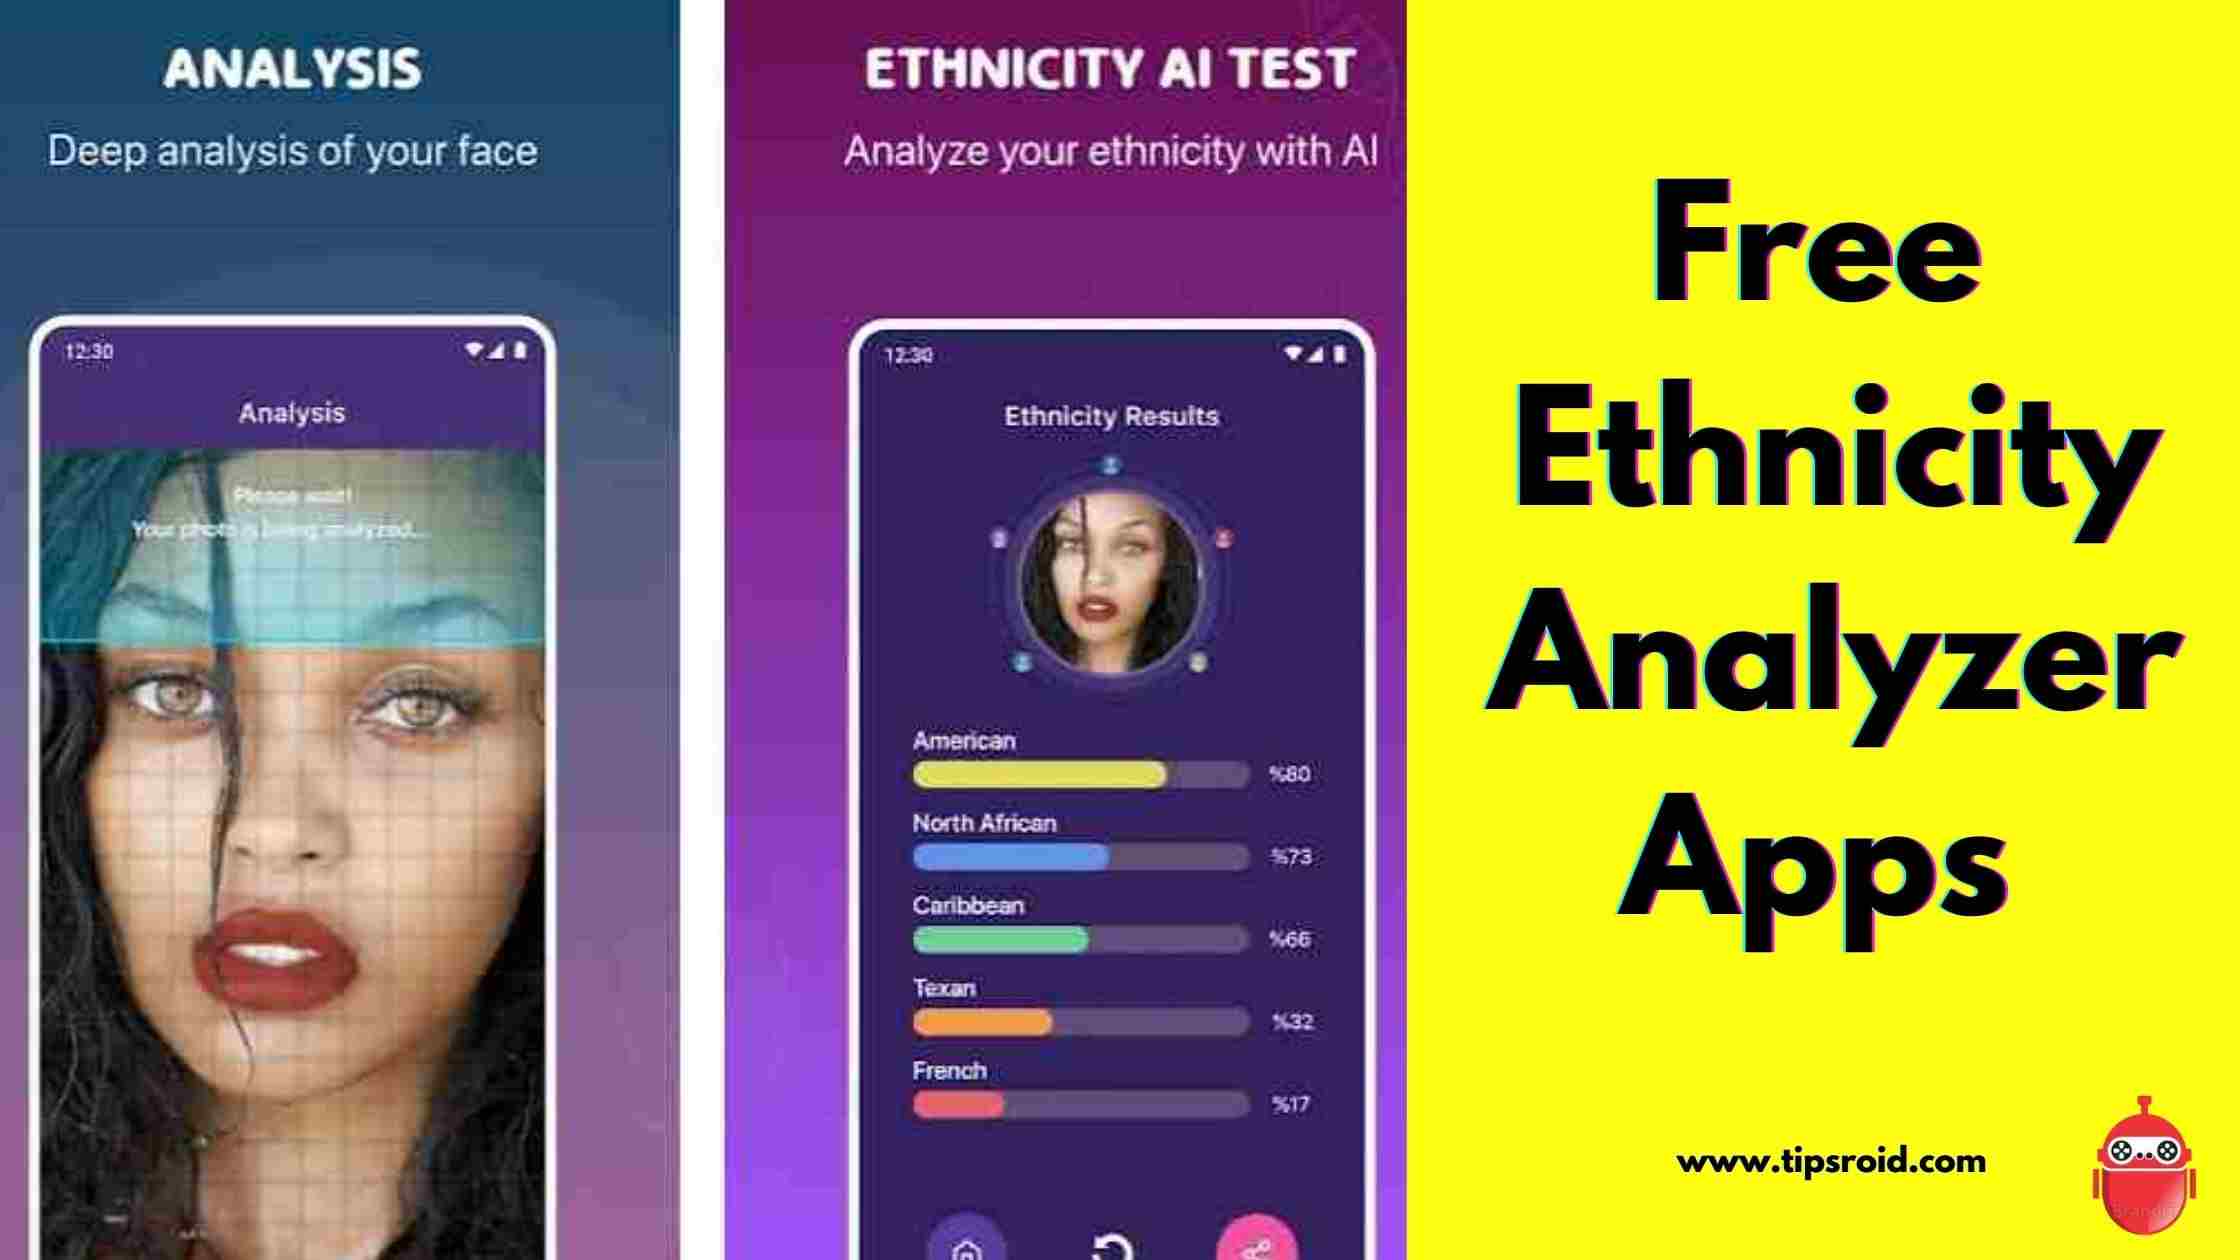 Ethnicity Analyzer App